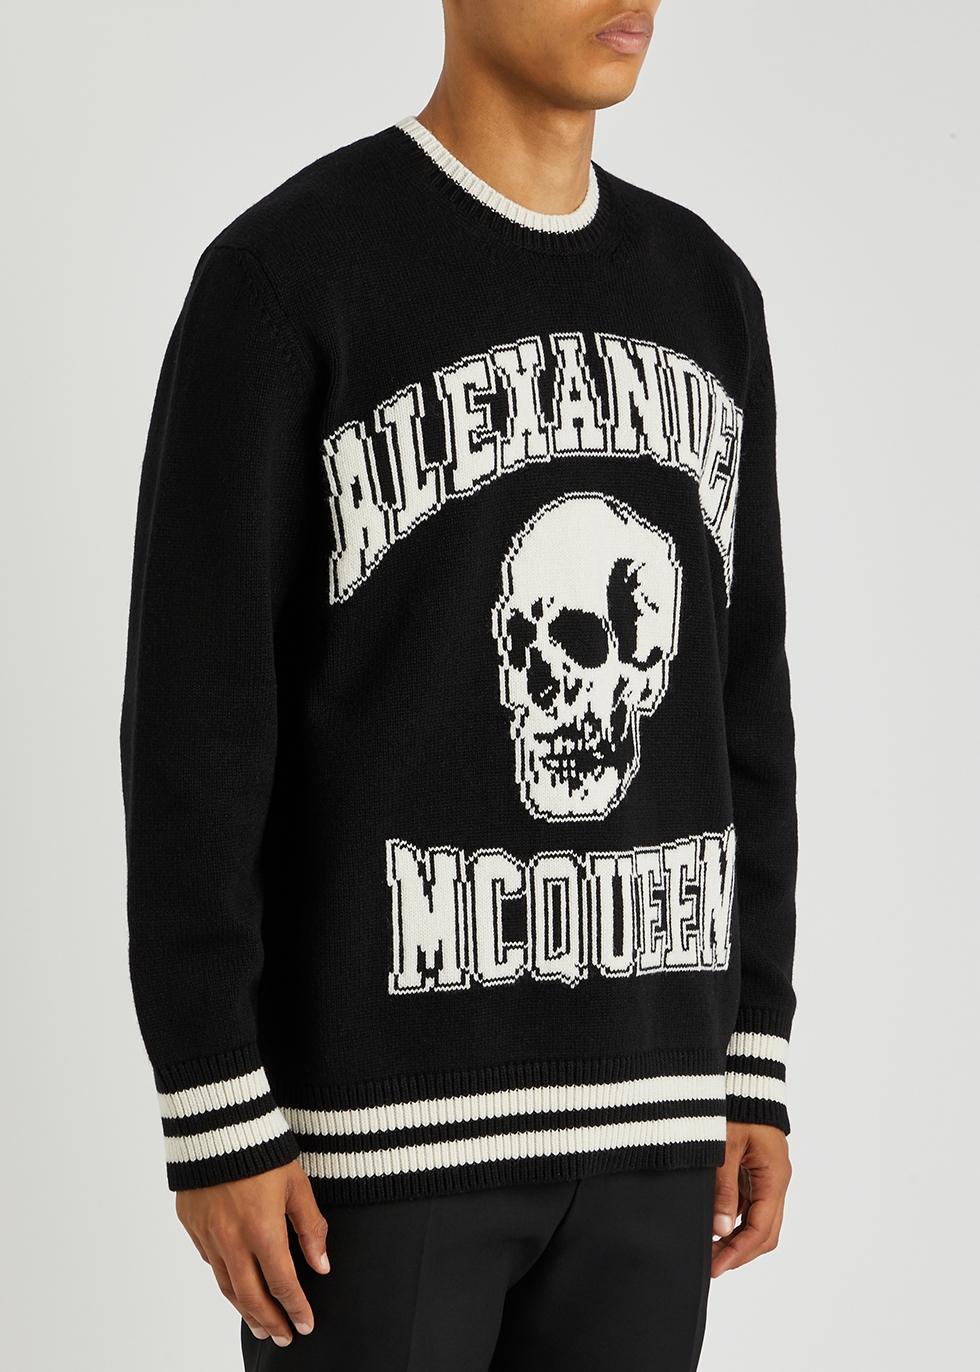 Alexander McQueen, Logo-Jacquard Wool and Cashmere-Blend Sweater, Men, Black, S